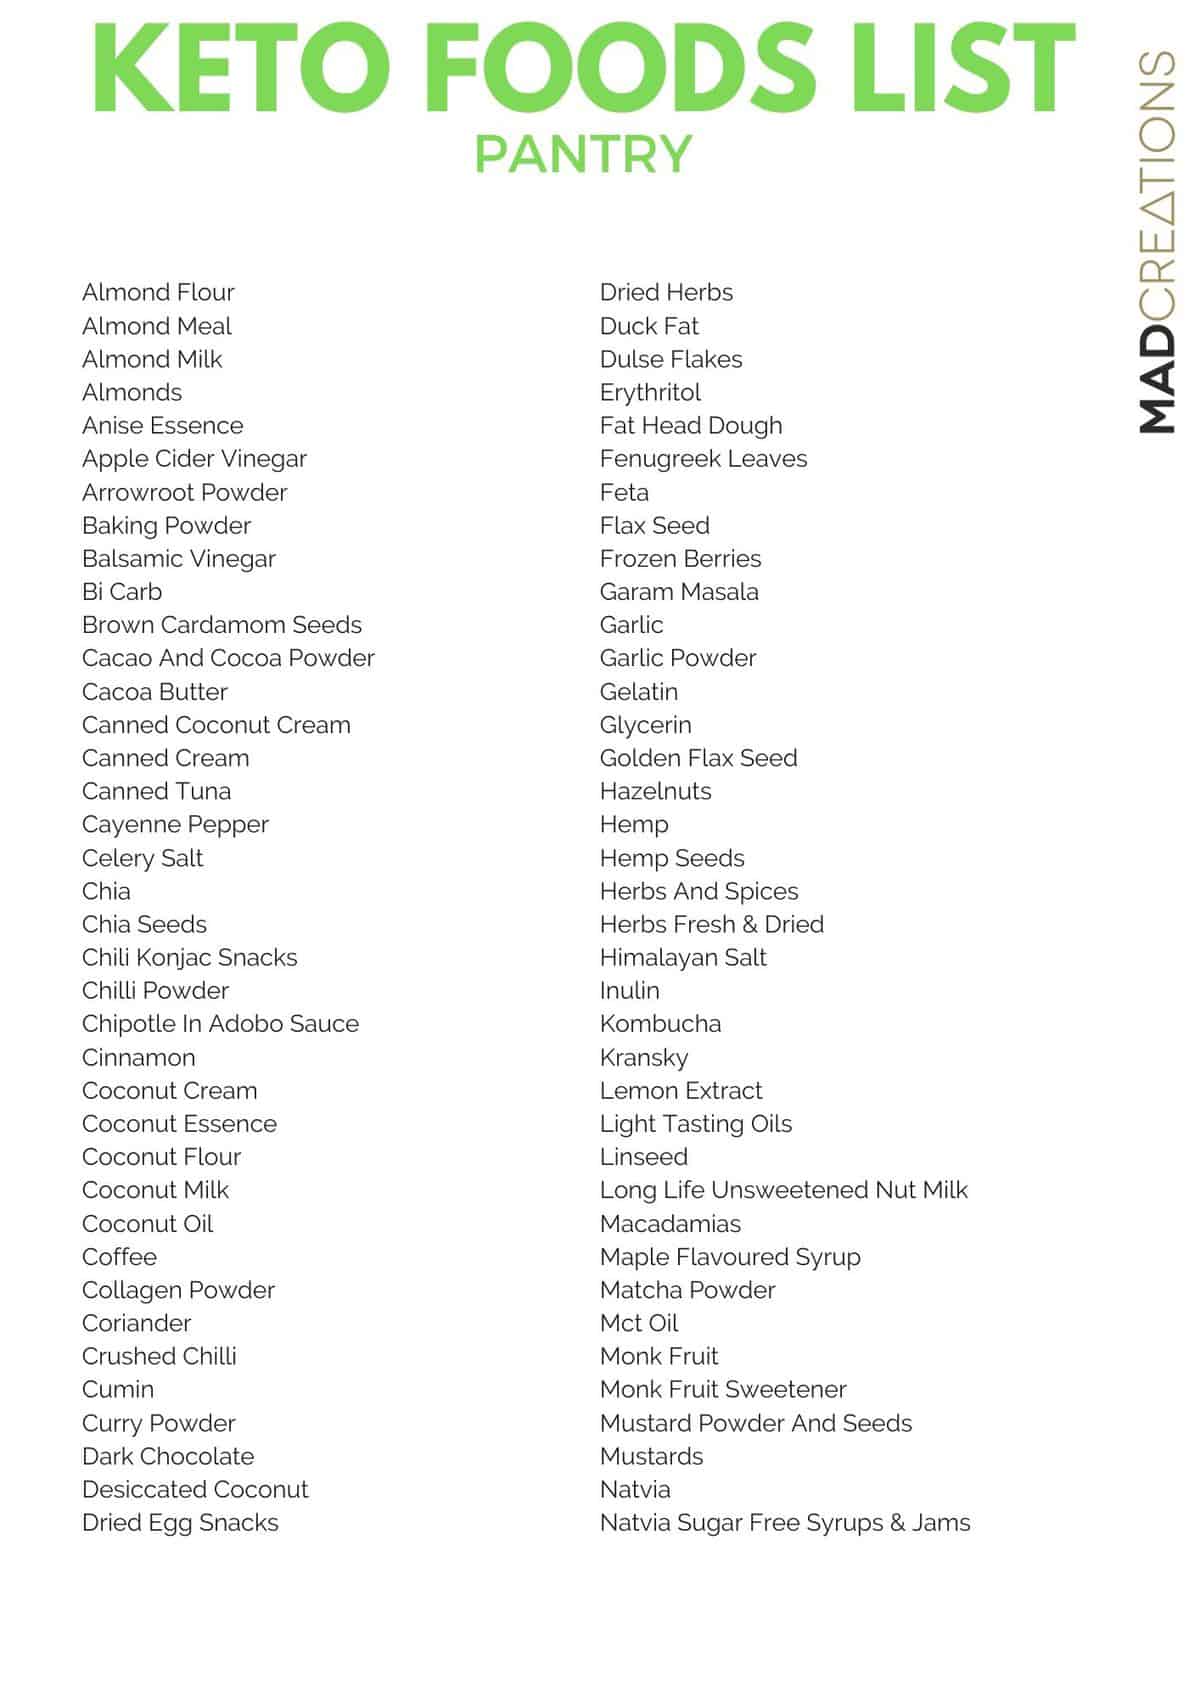 image of a keto food list